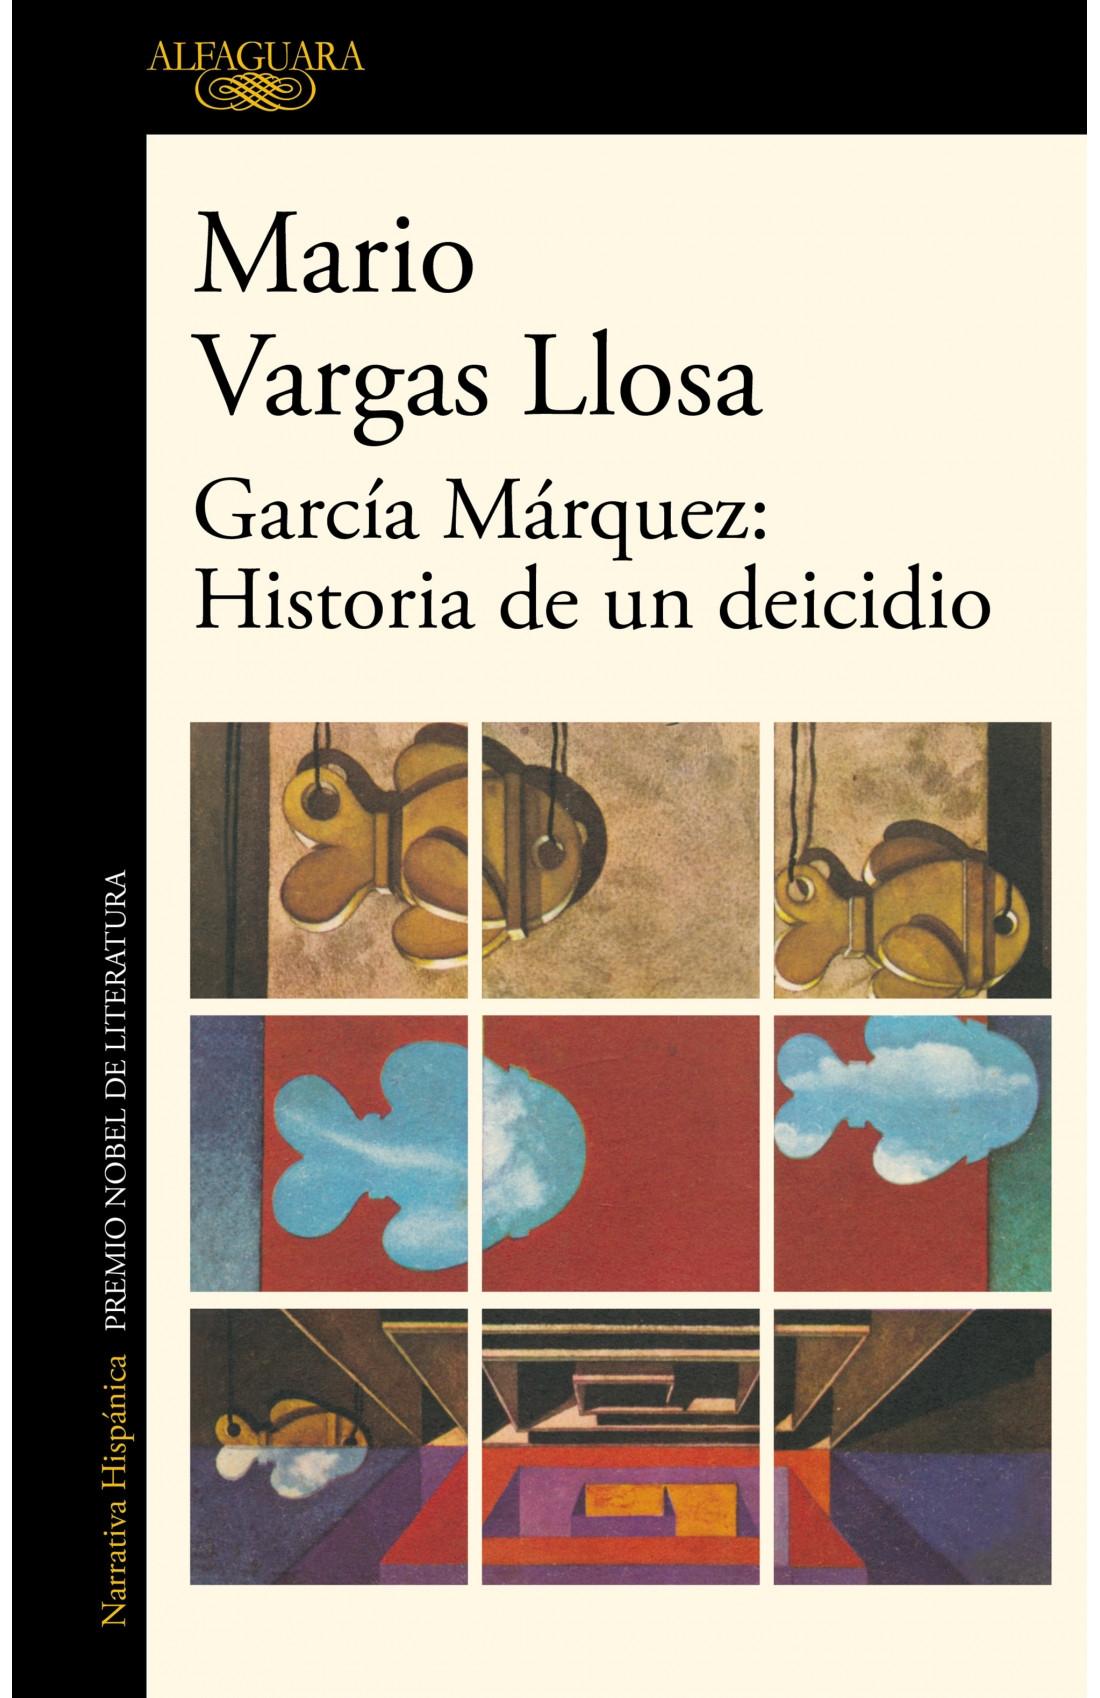 García Márquez: Historia de un deicidio. 